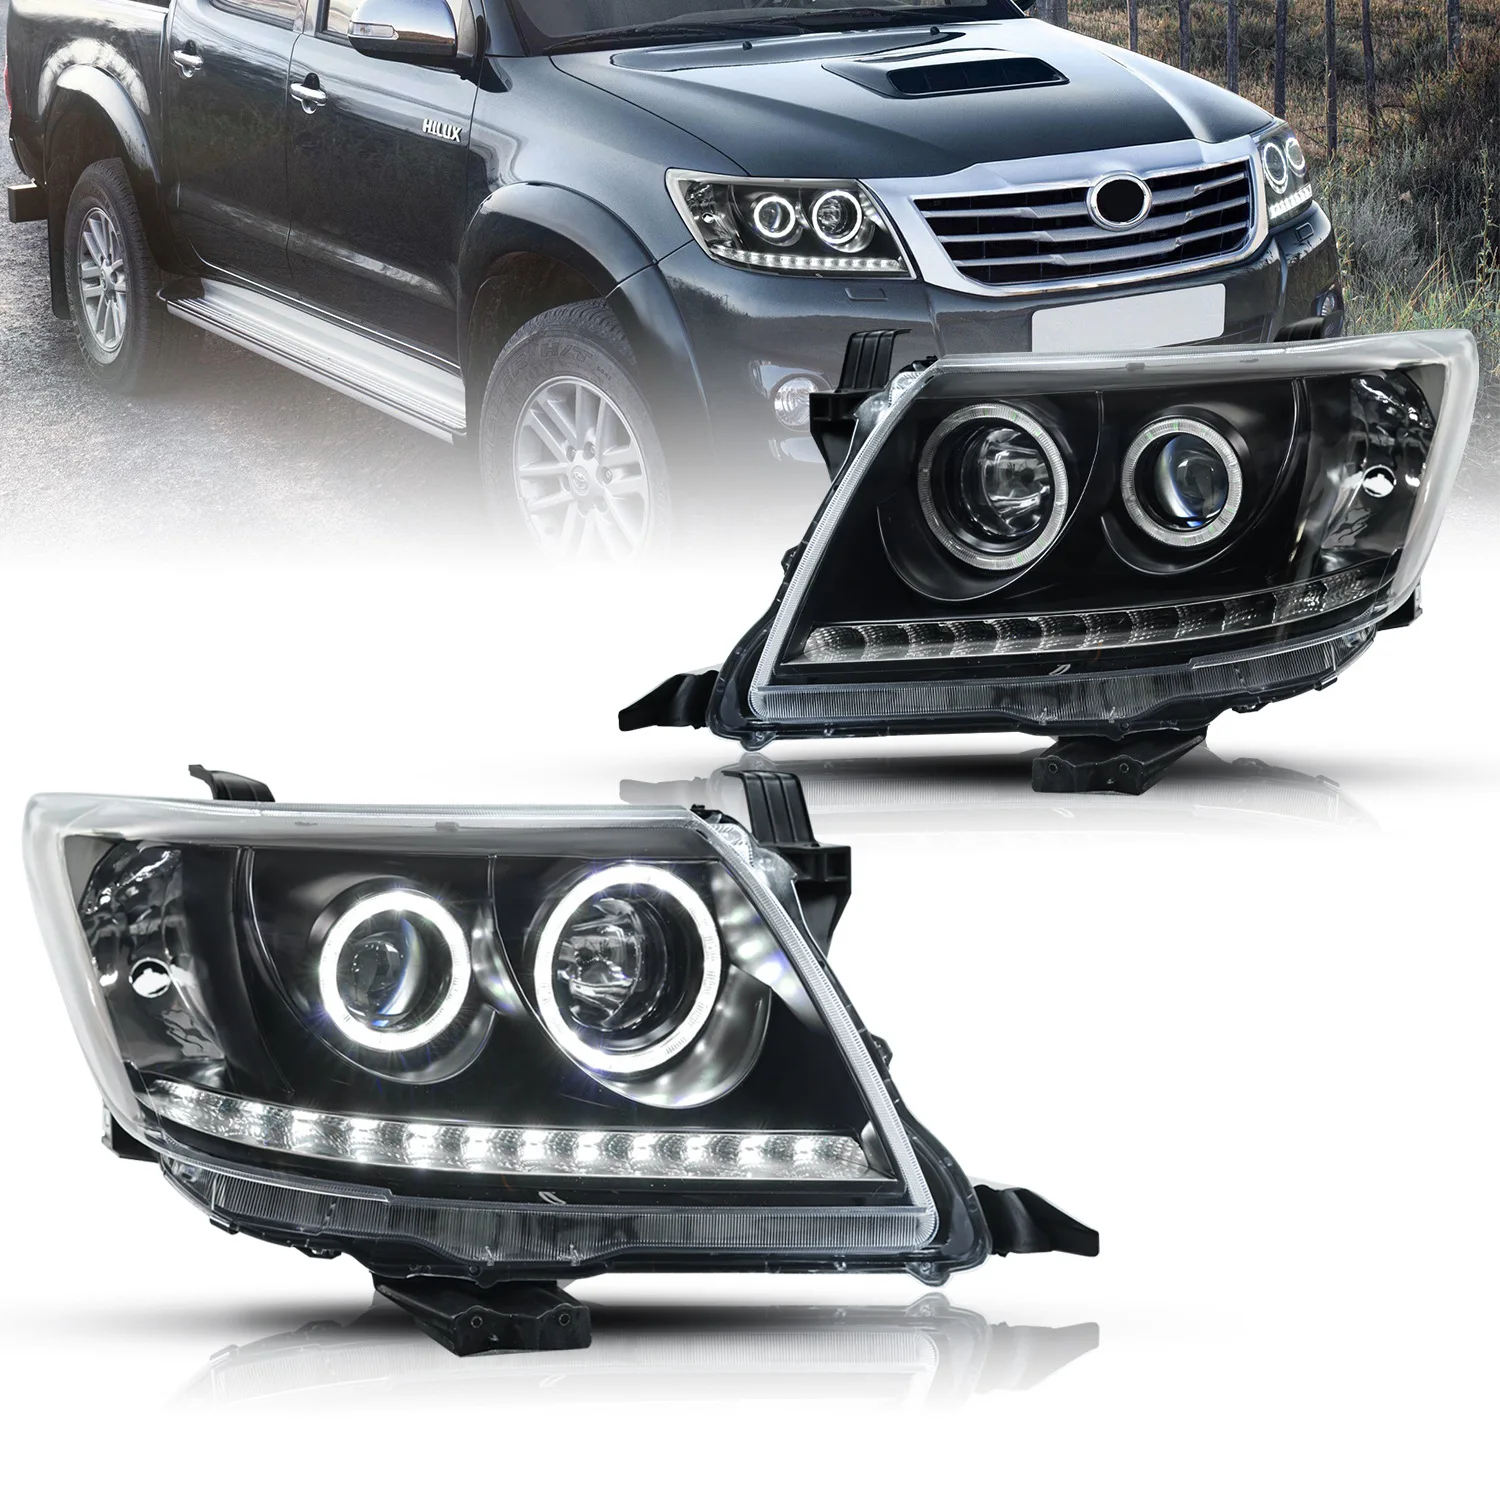 

Factory Car headlights auto lighting system head lamp for Toyota Hilux Revo vigo 2012-2014